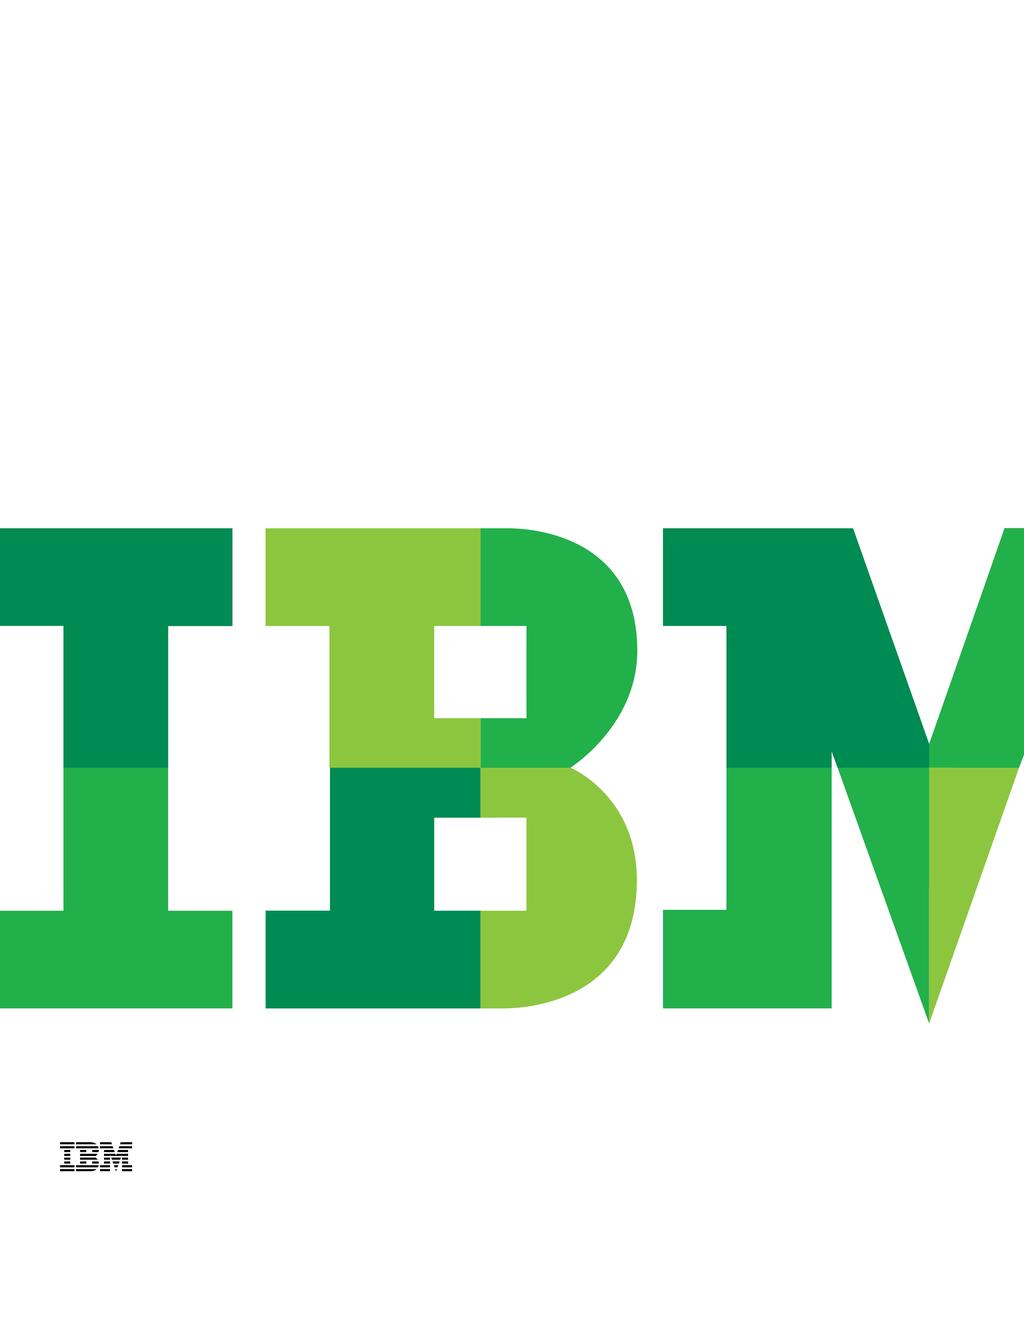 An IBM Proof of Technology IBM